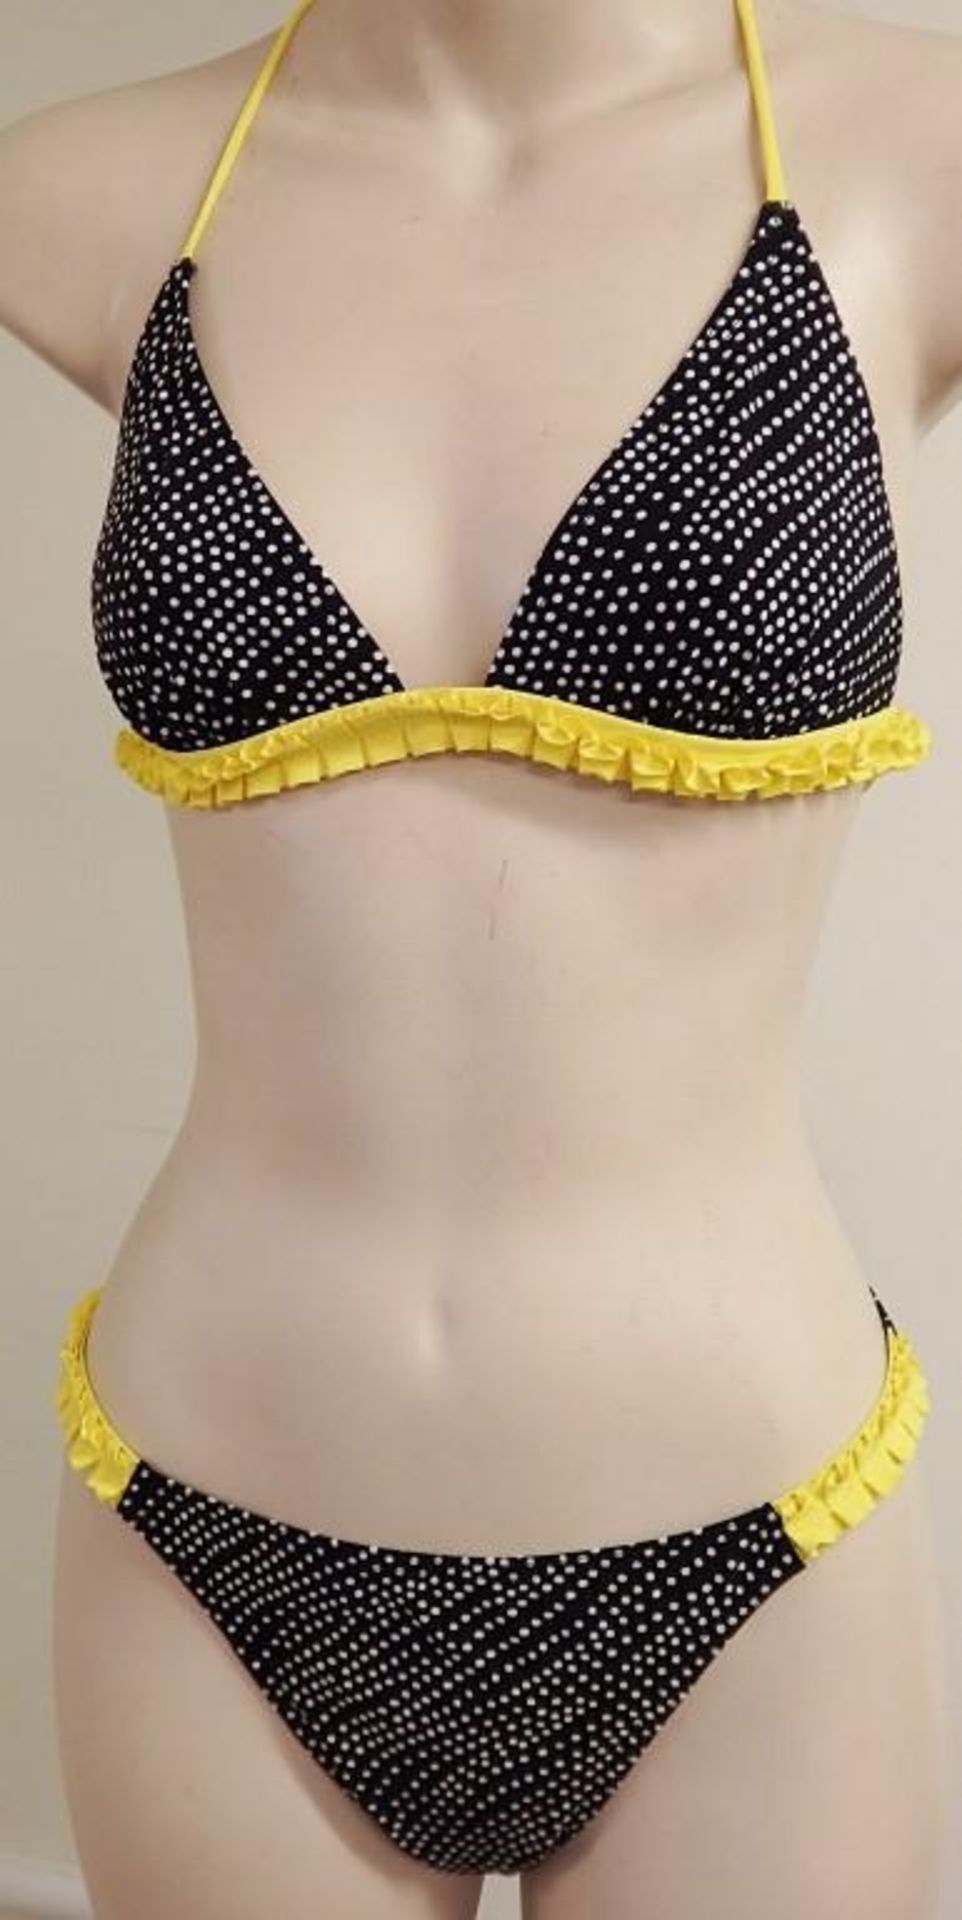 1 x Rasurel - Black Polka dot and Yellow Frill Gold Bikini - R21061 Touquet -Shorty - Size 2 - UK 32 - Image 5 of 9